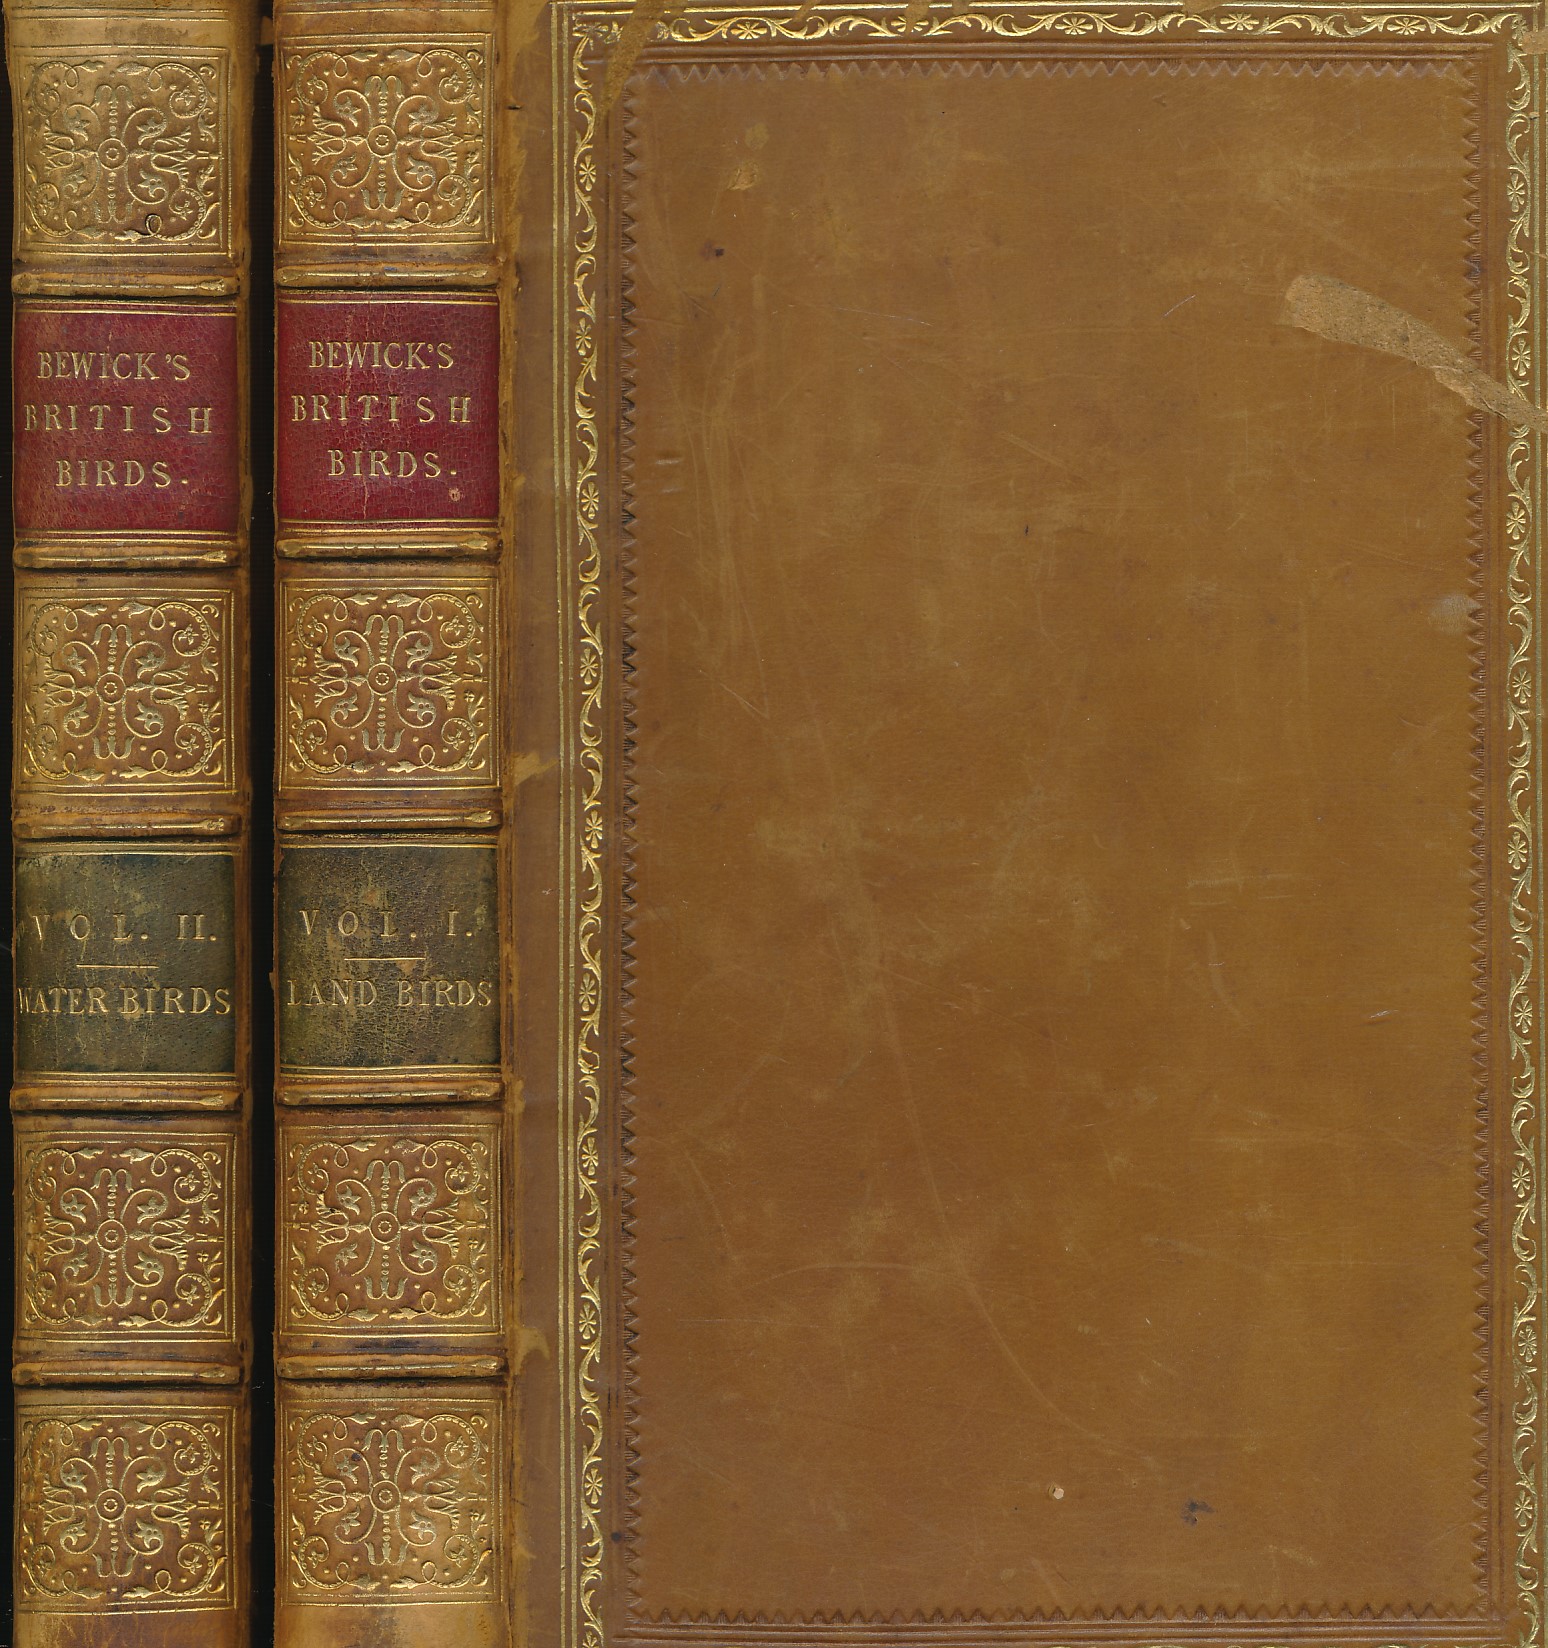 A History of British Birds. 2 volume set. 1847.